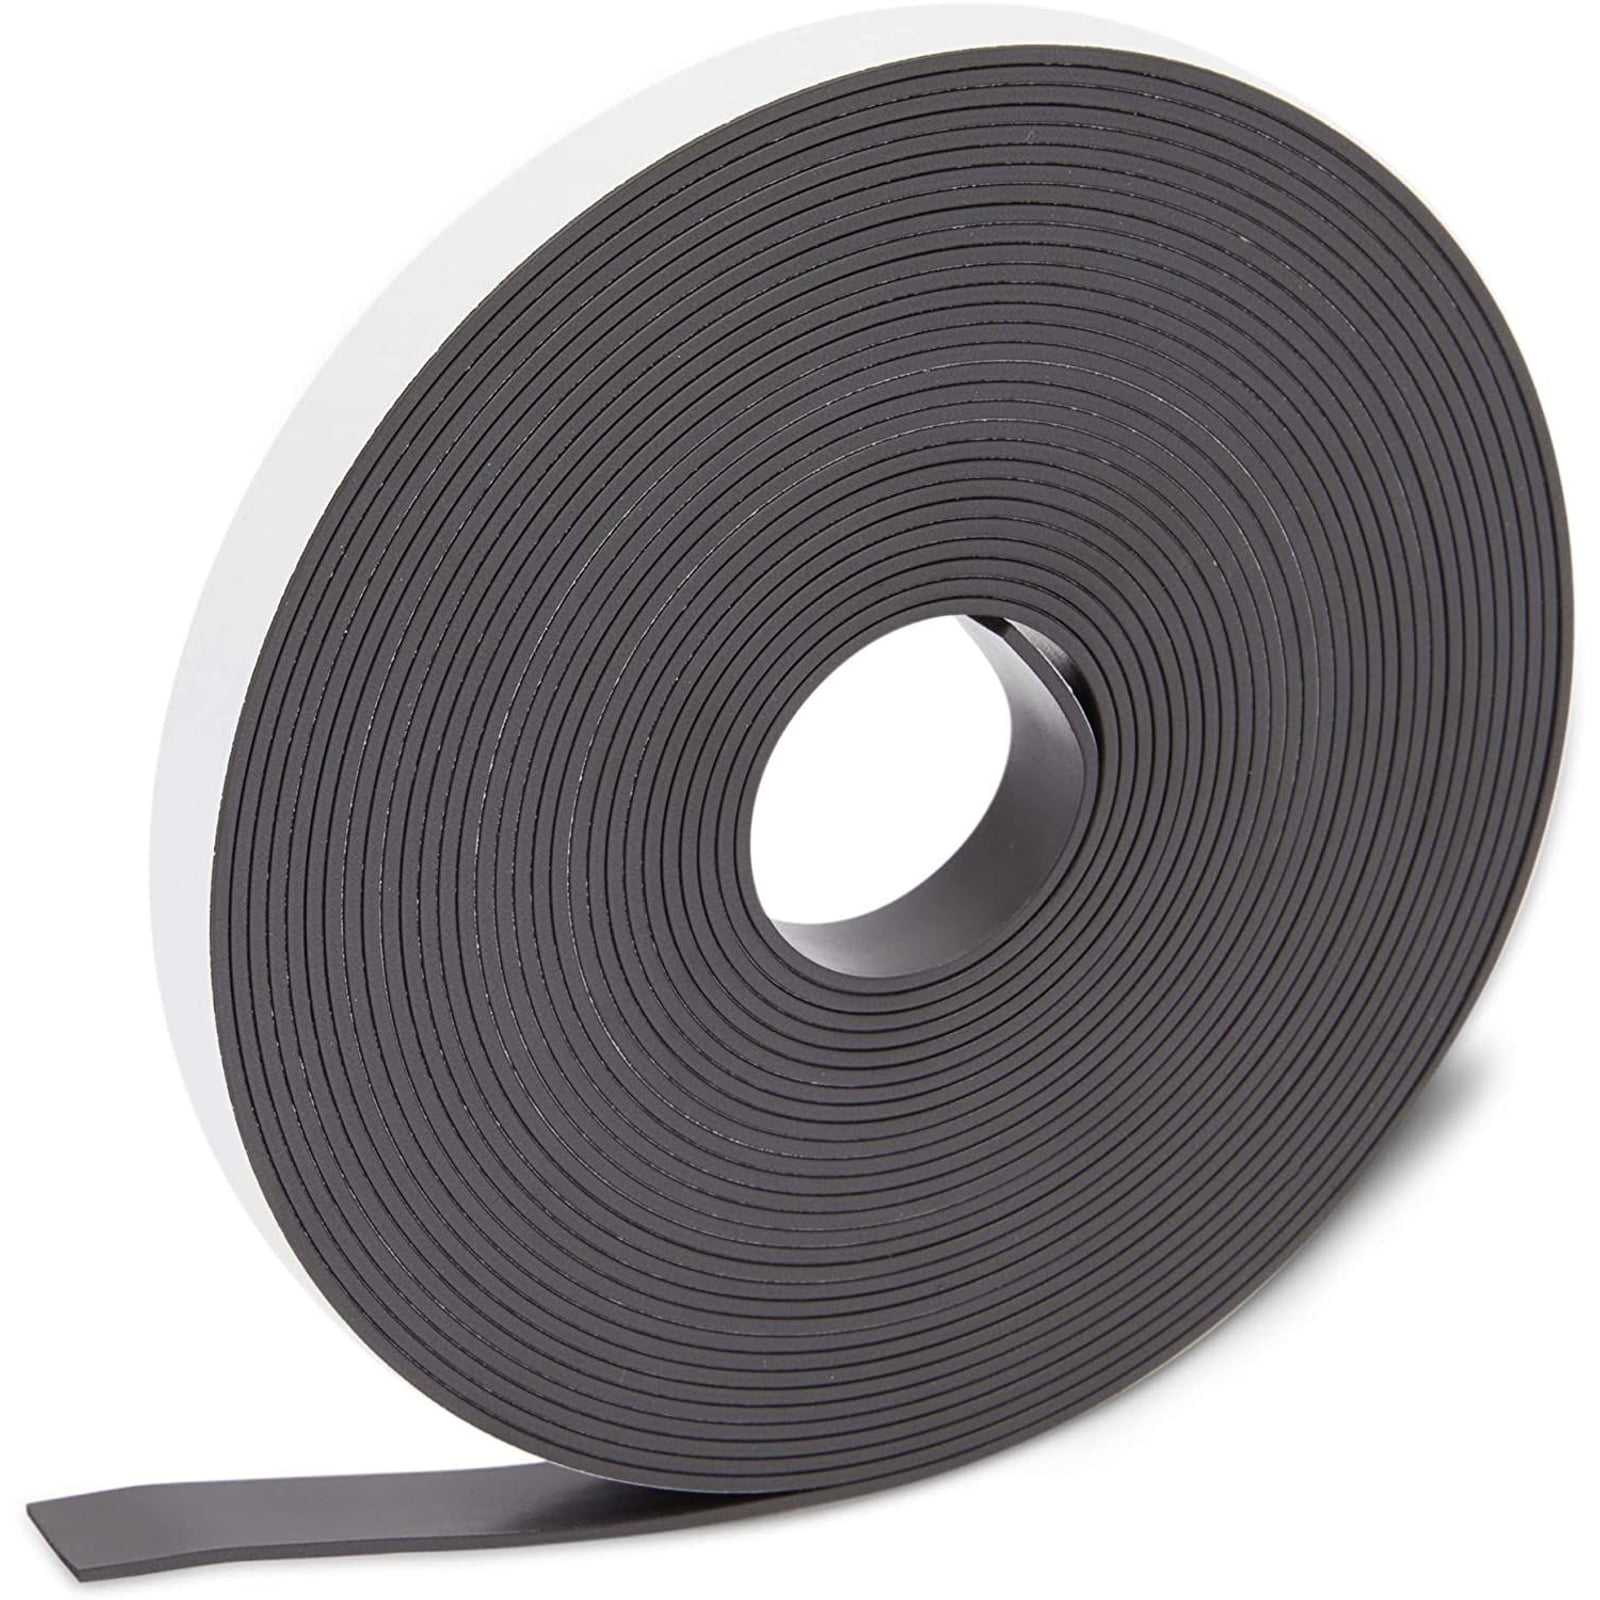 Rubber Magnetic Strips for Fridge and Teaching Flexible Magneti Tape 